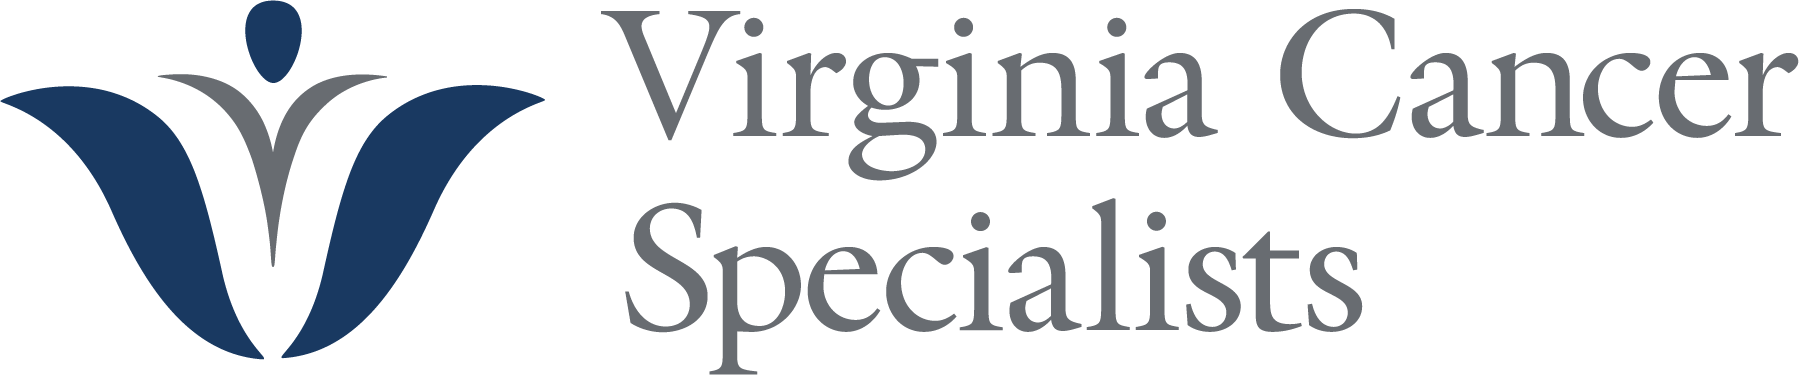 Virginia Cancer Specialists logo